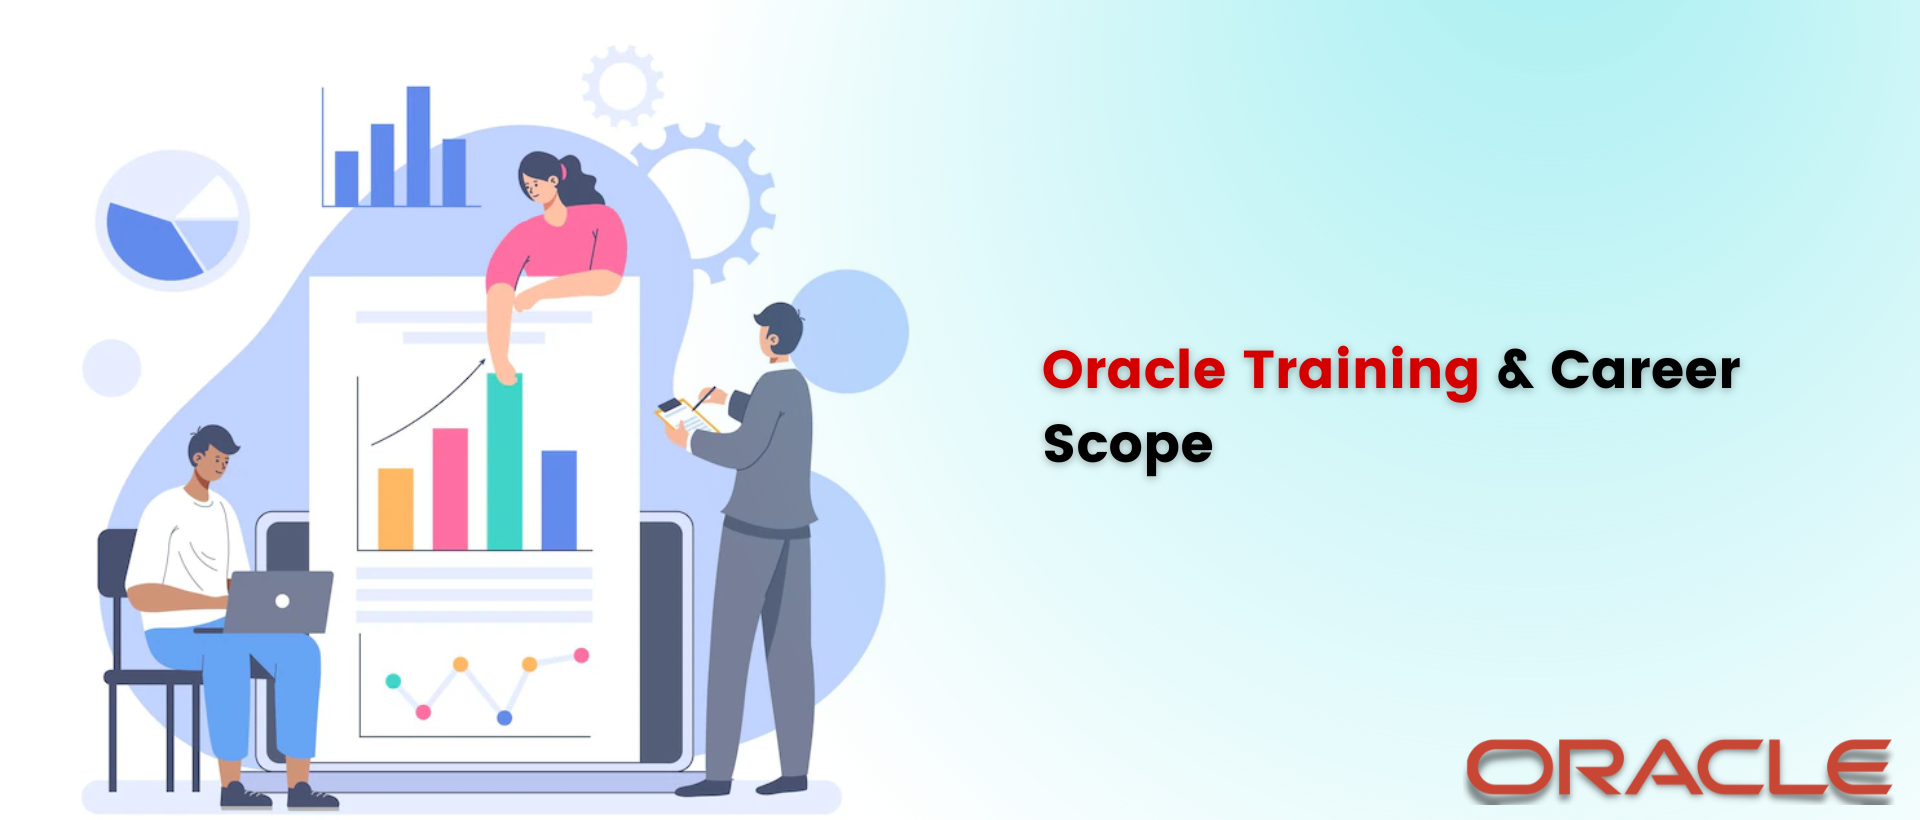 Oracle Training & Career Scope